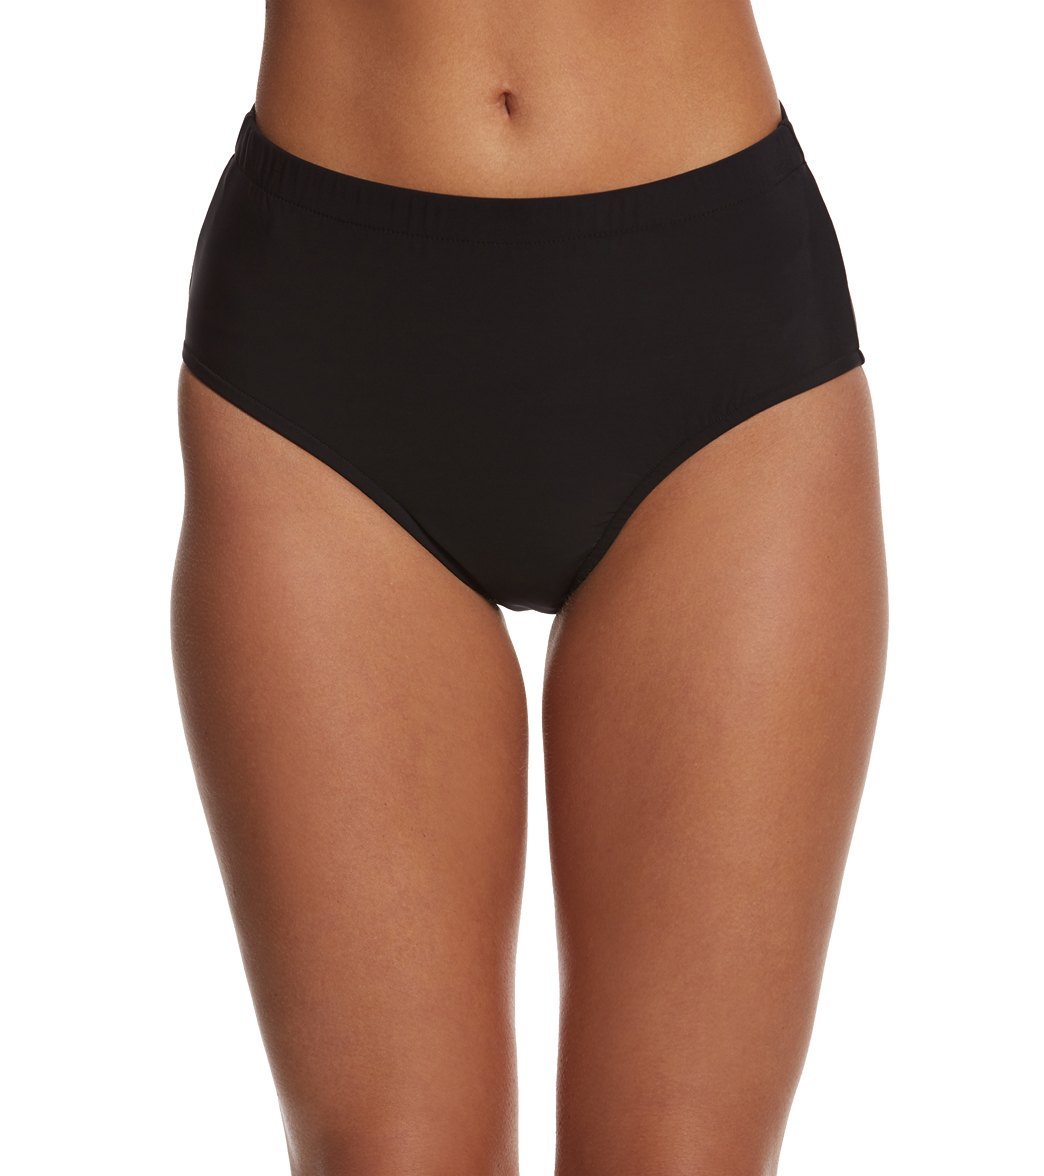 Penbrooke Swimwear Solid Basic Pants Bikini Bottom - Black 8 Nylon/Spandex - Swimoutlet.com